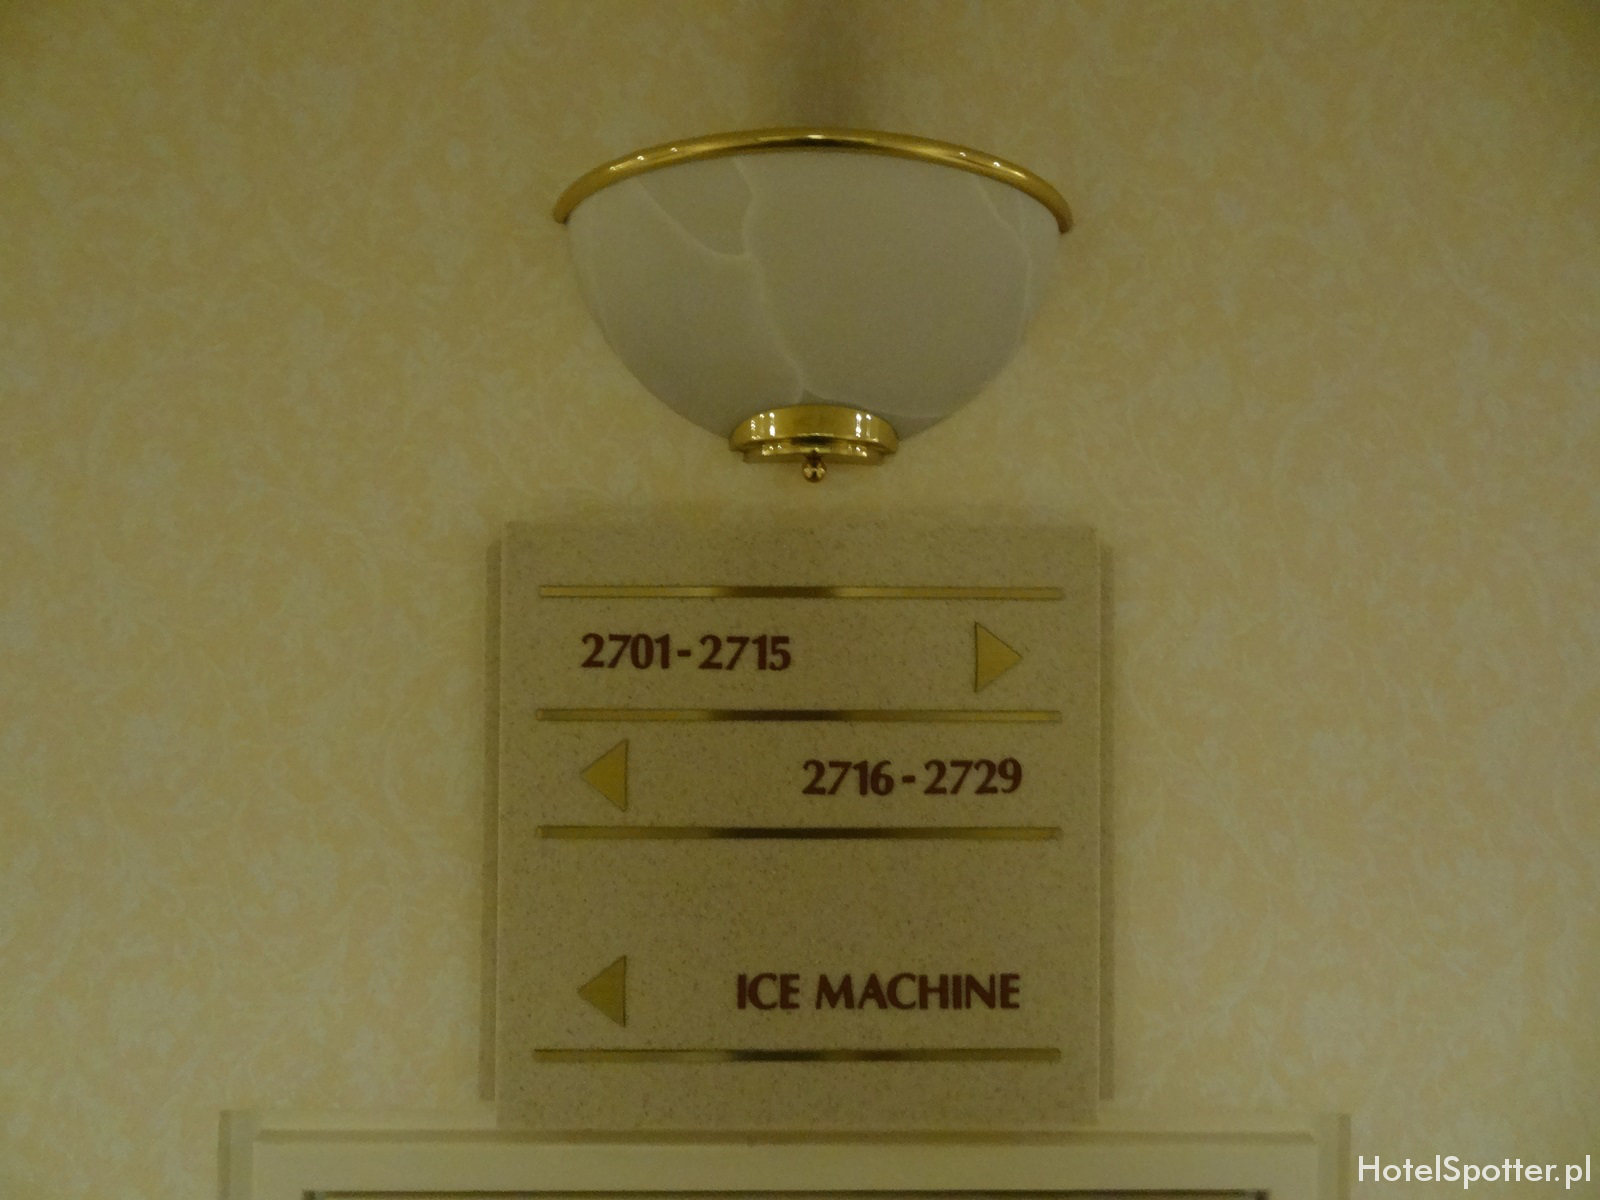 Hotel Marriott Warszawa - ice machine